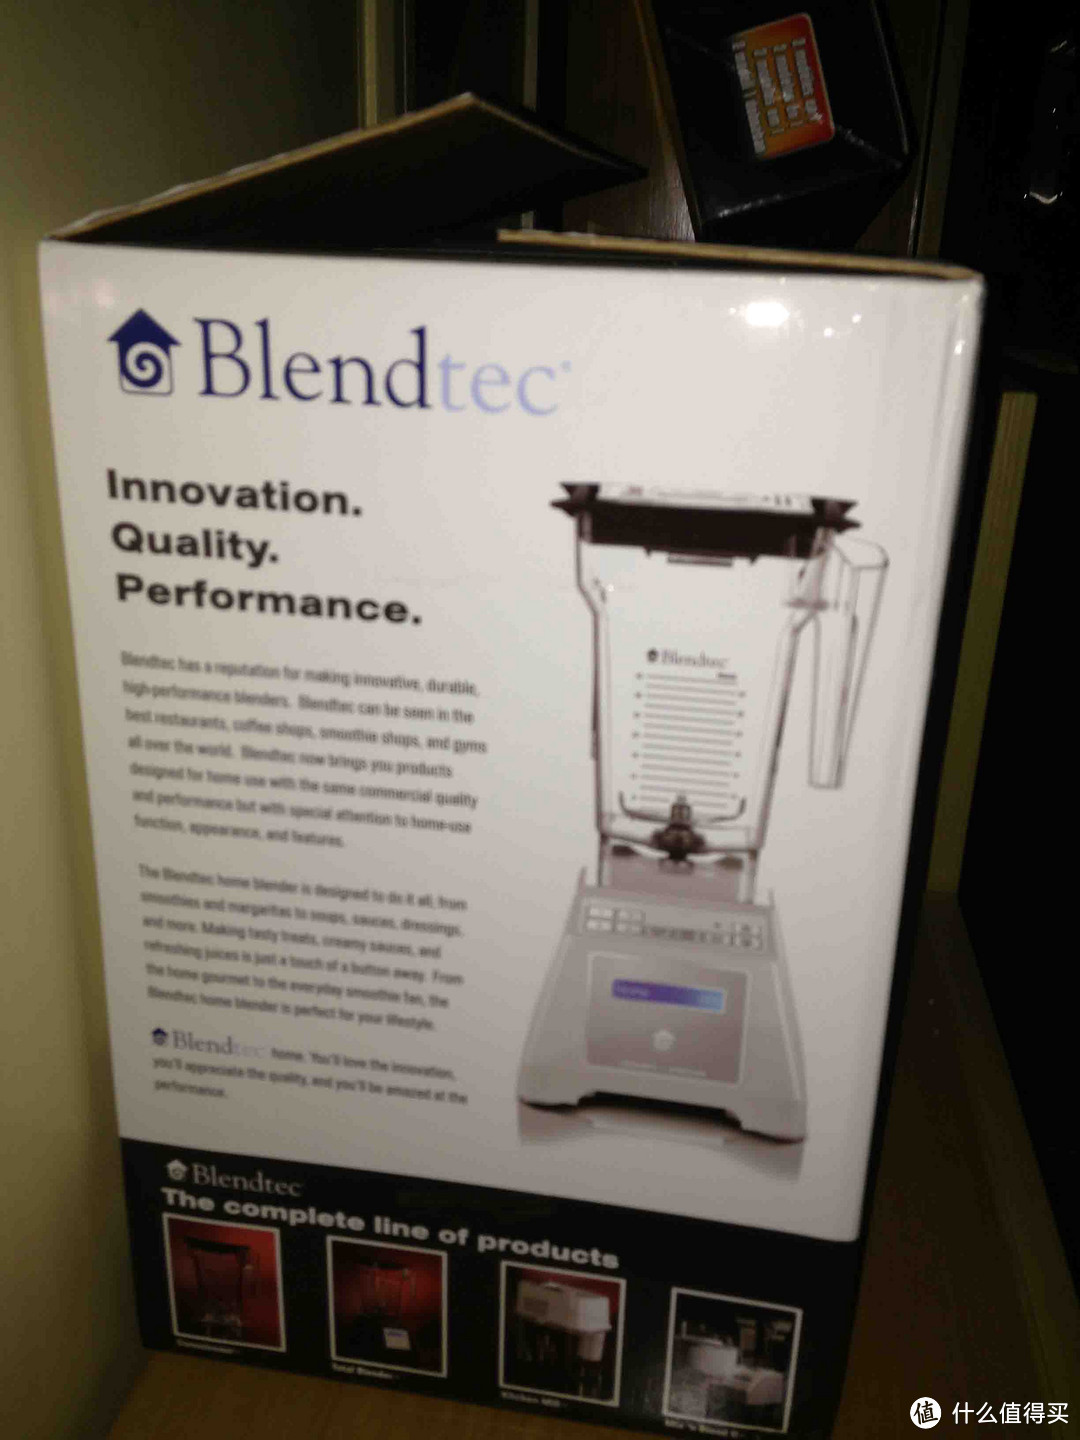 Blendtec搅拌机-搅碎iPhone,iPad各种电子设备. M快餐,绿咖啡店的伙伴